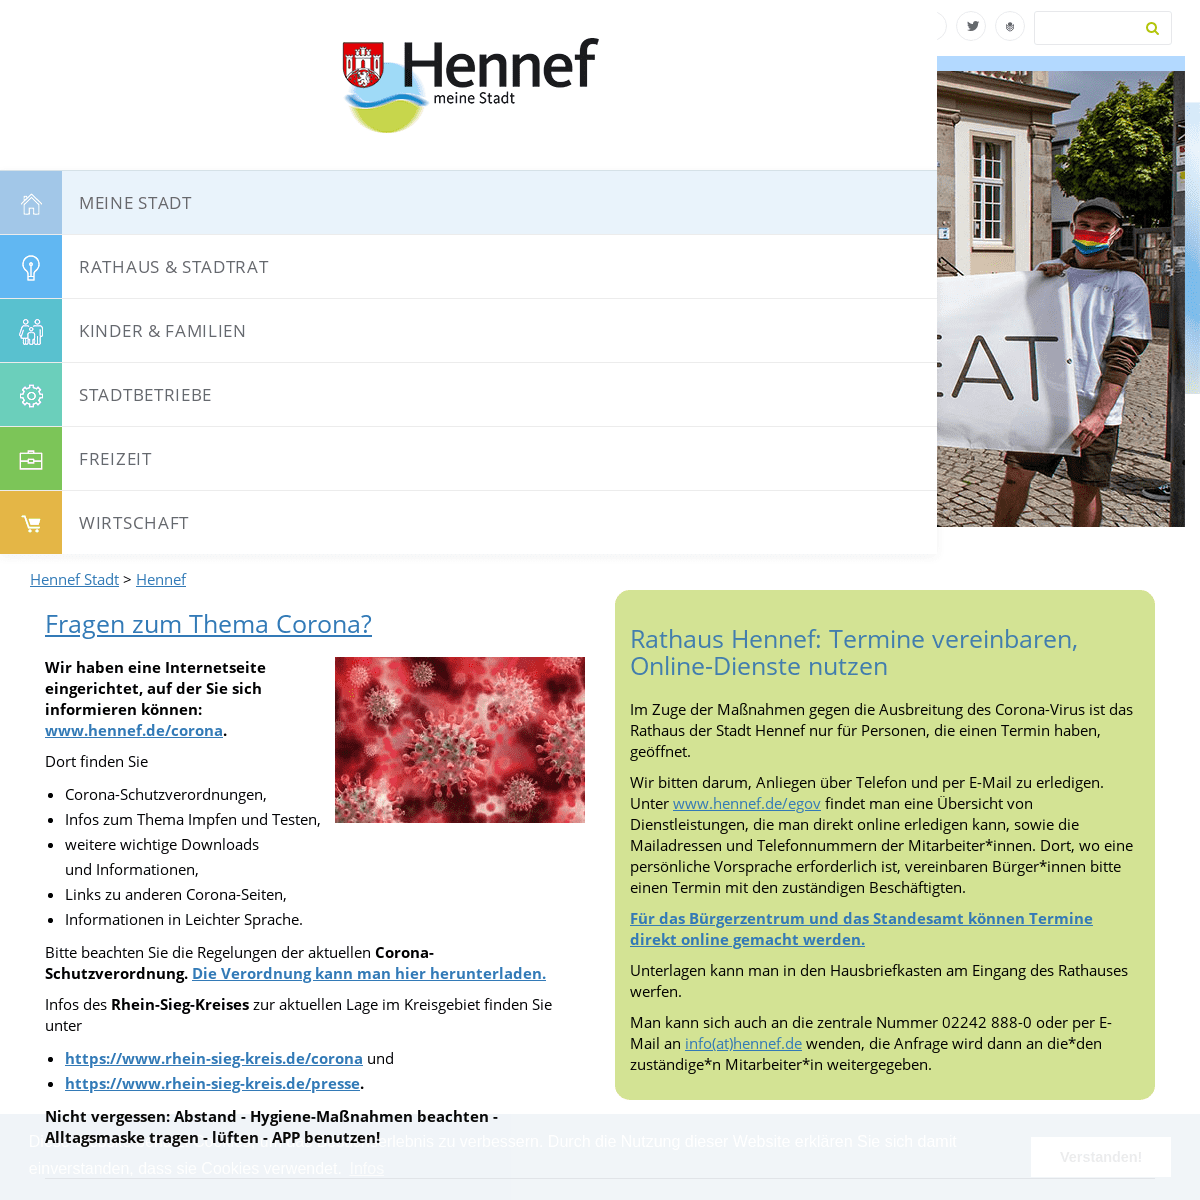 A complete backup of https://hennef.de